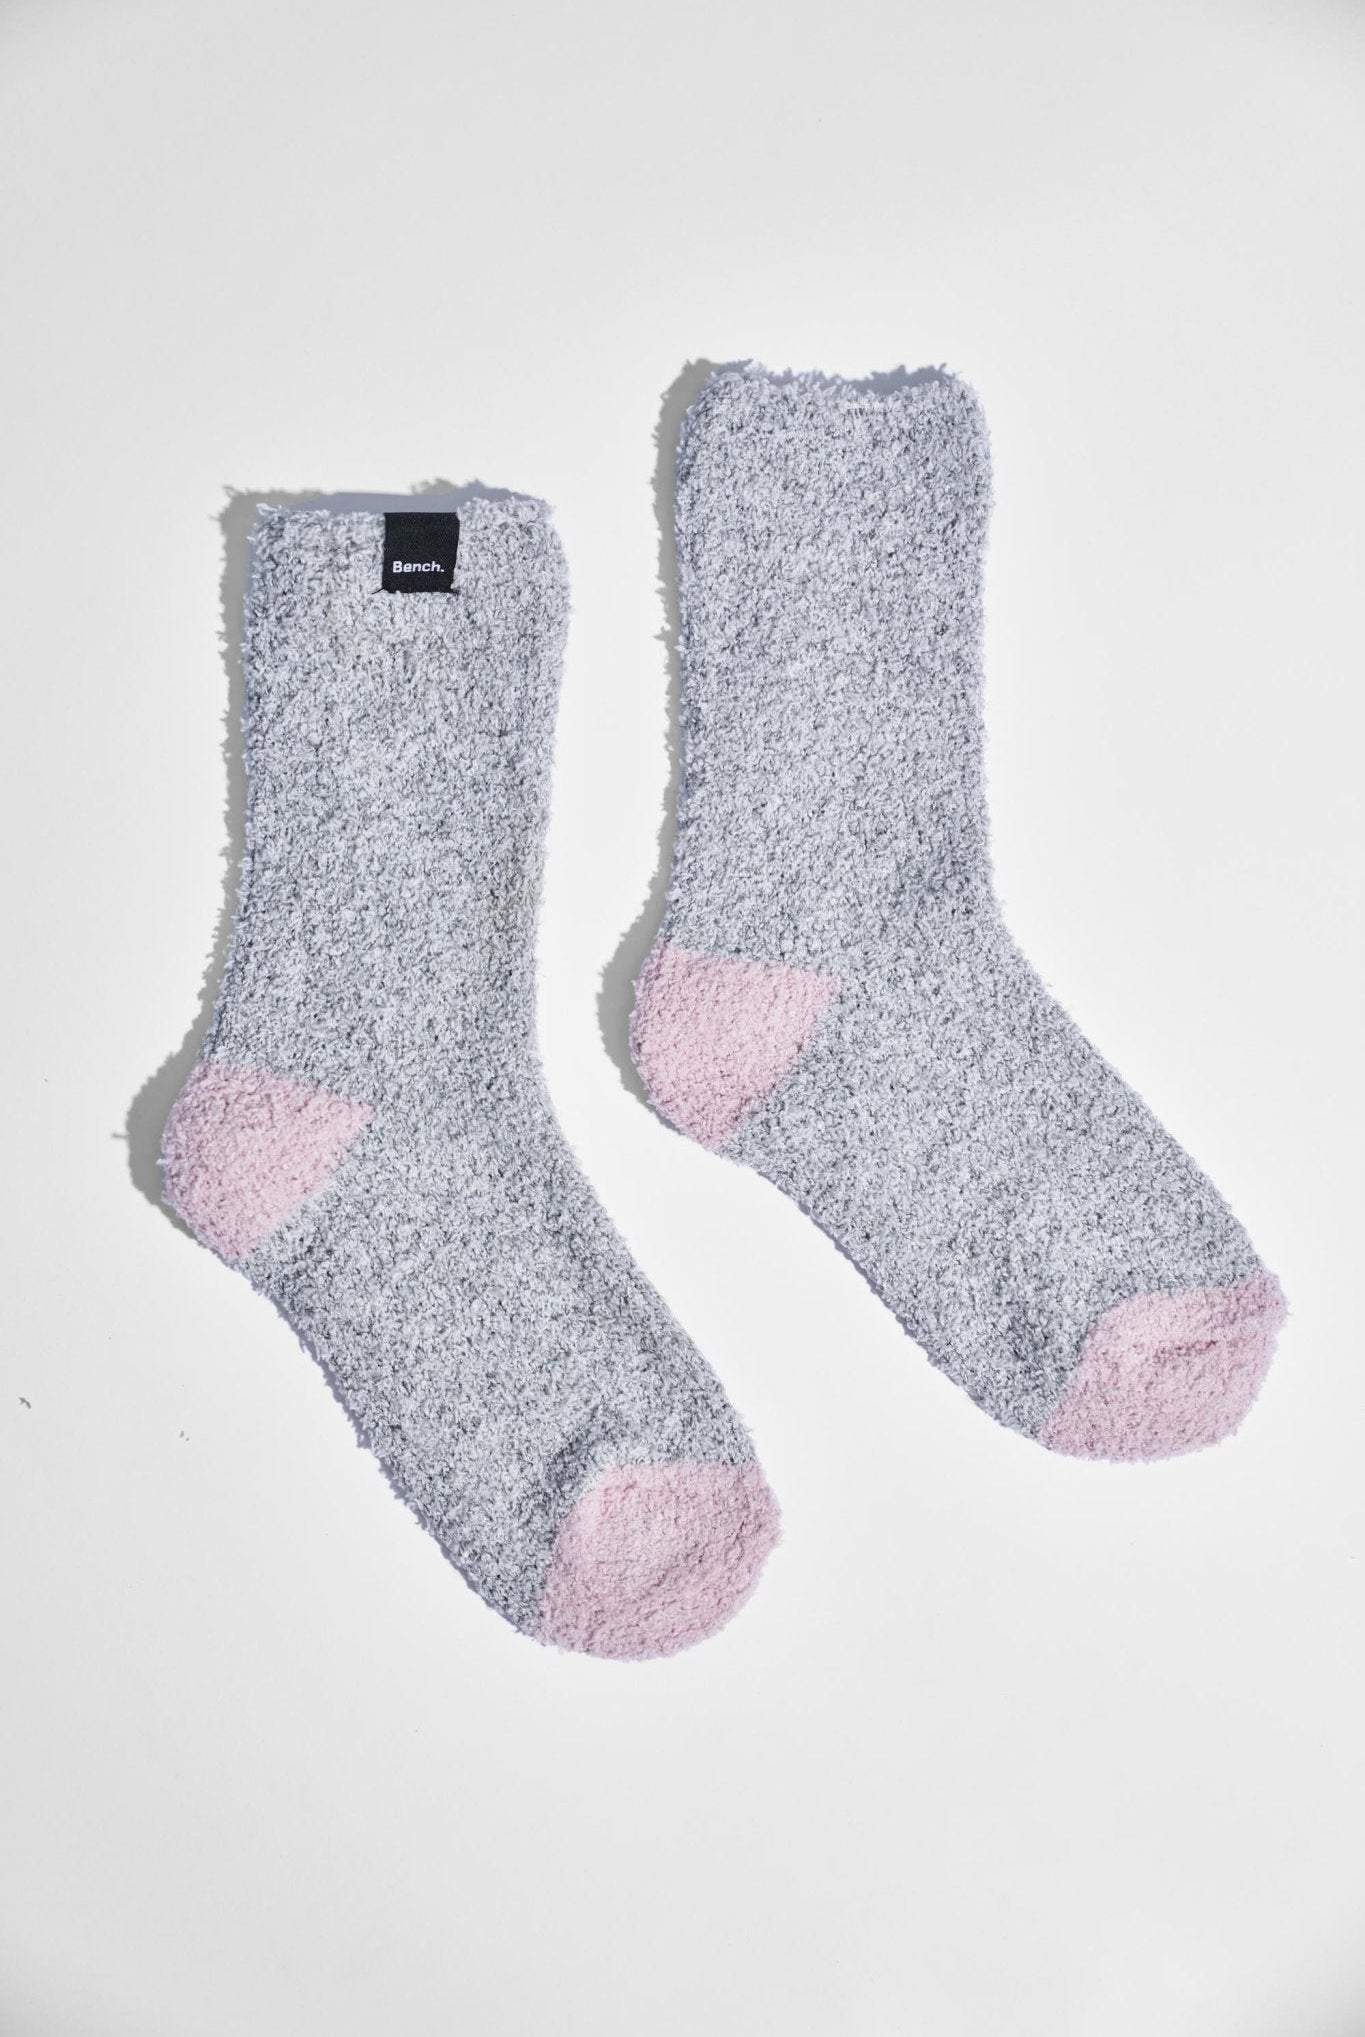 Socks – Bench Clothing - Mens, Womens